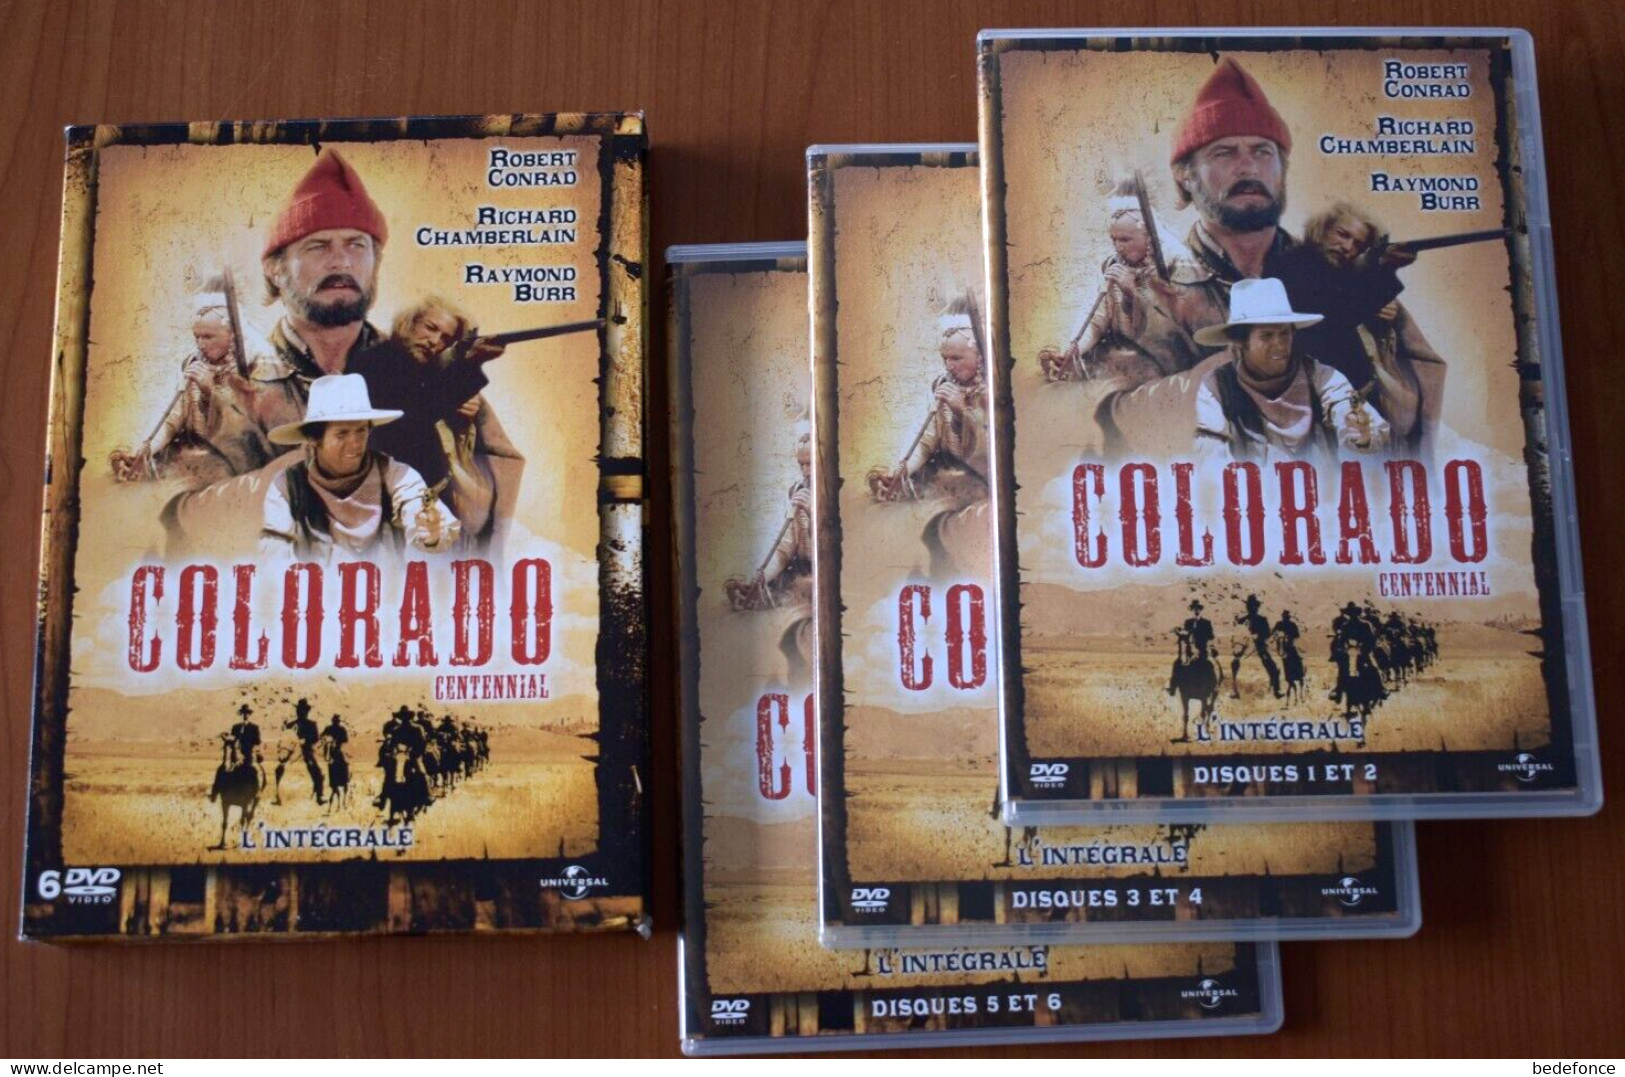 DVD - Colorado Centennial - Coffret Intégrale - 6 Dvd - R Conrad, R Chamberlain - TV-Serien